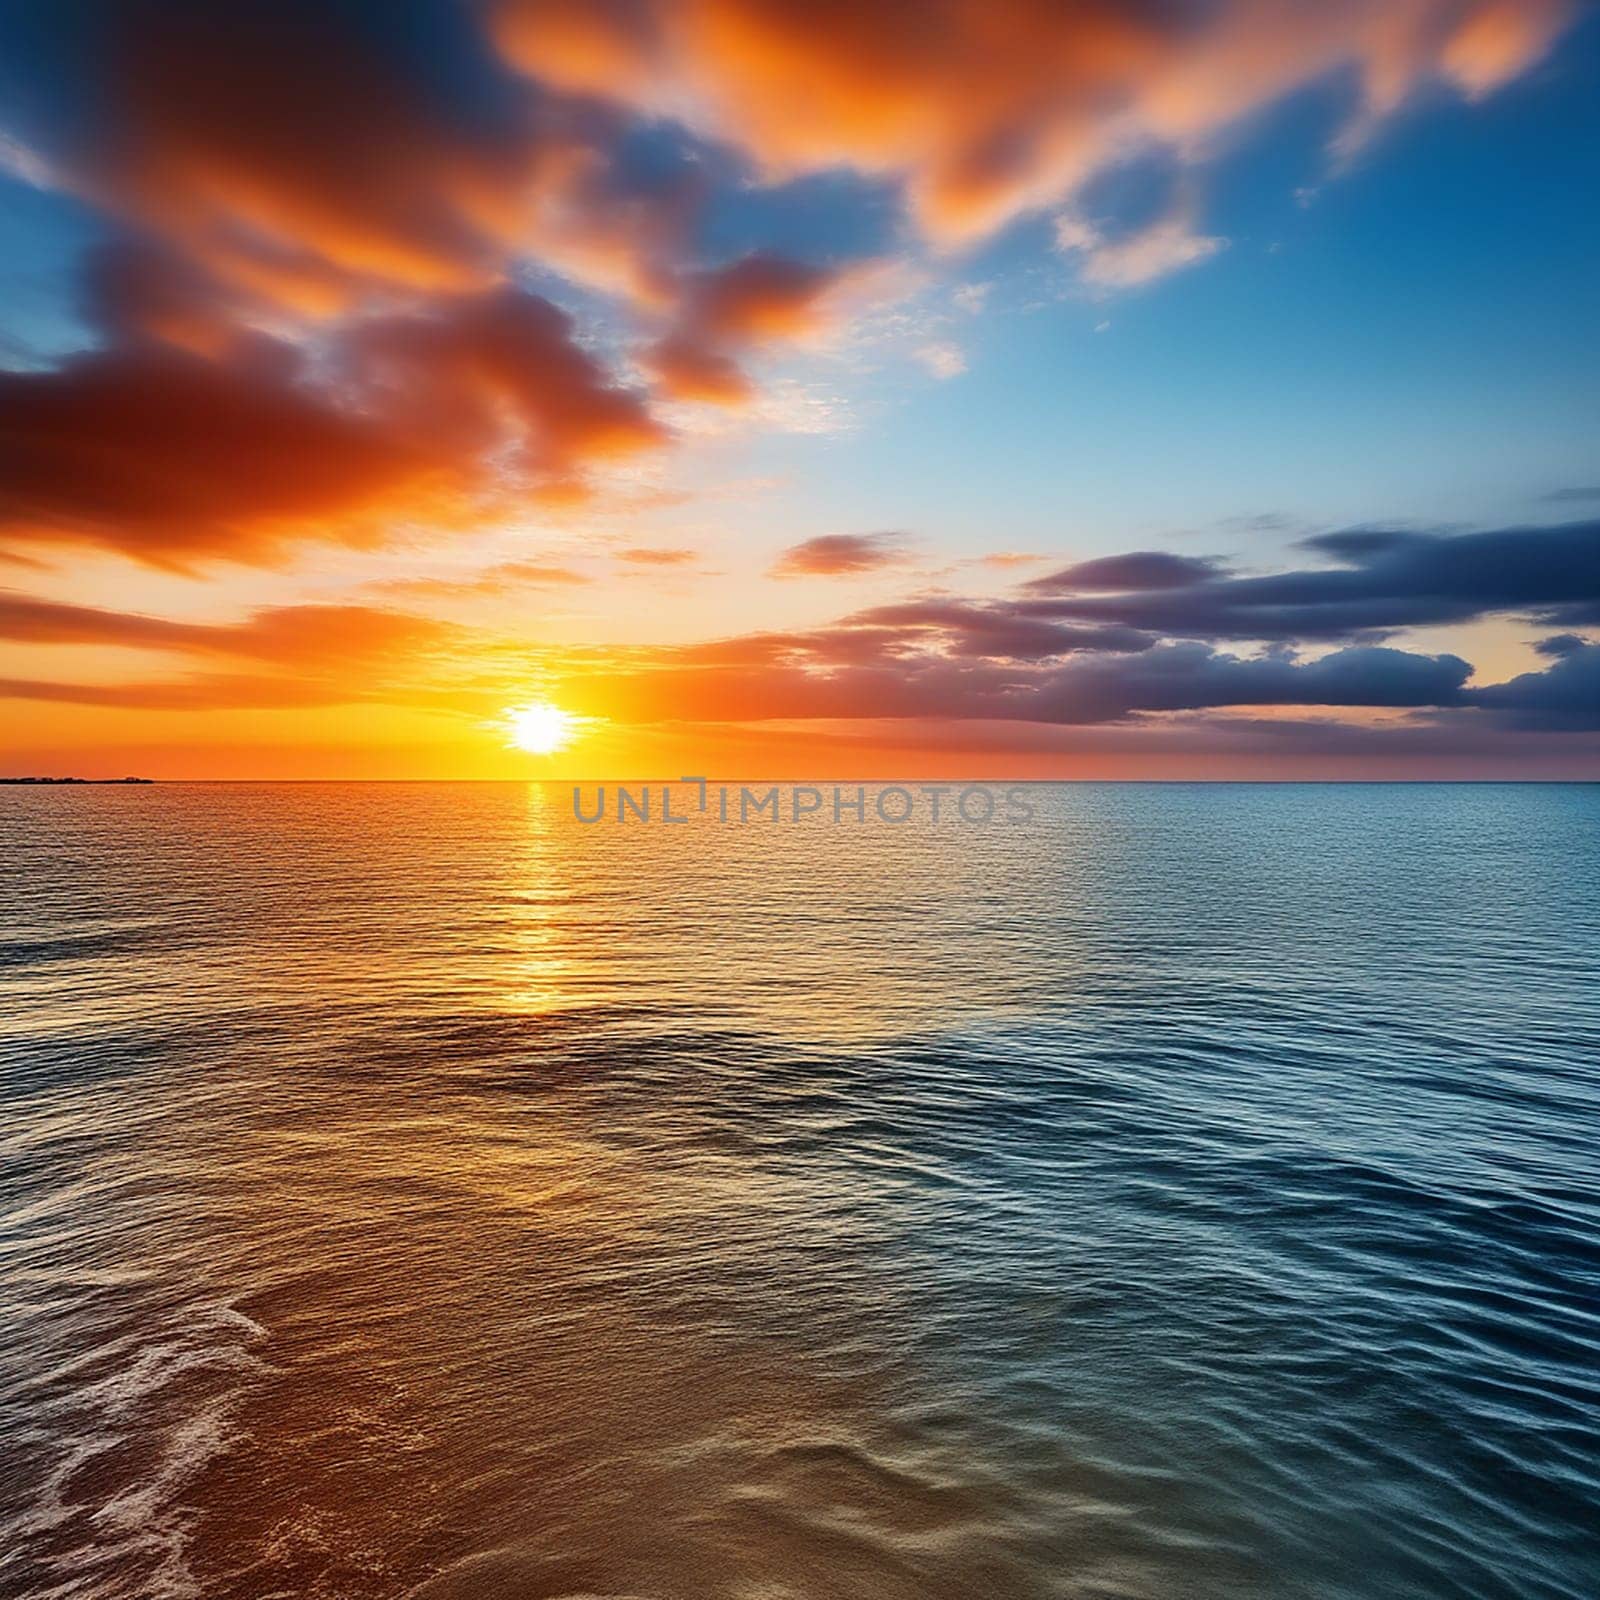 Seaside Serenade: Panoramic Sunrise Over the Sea